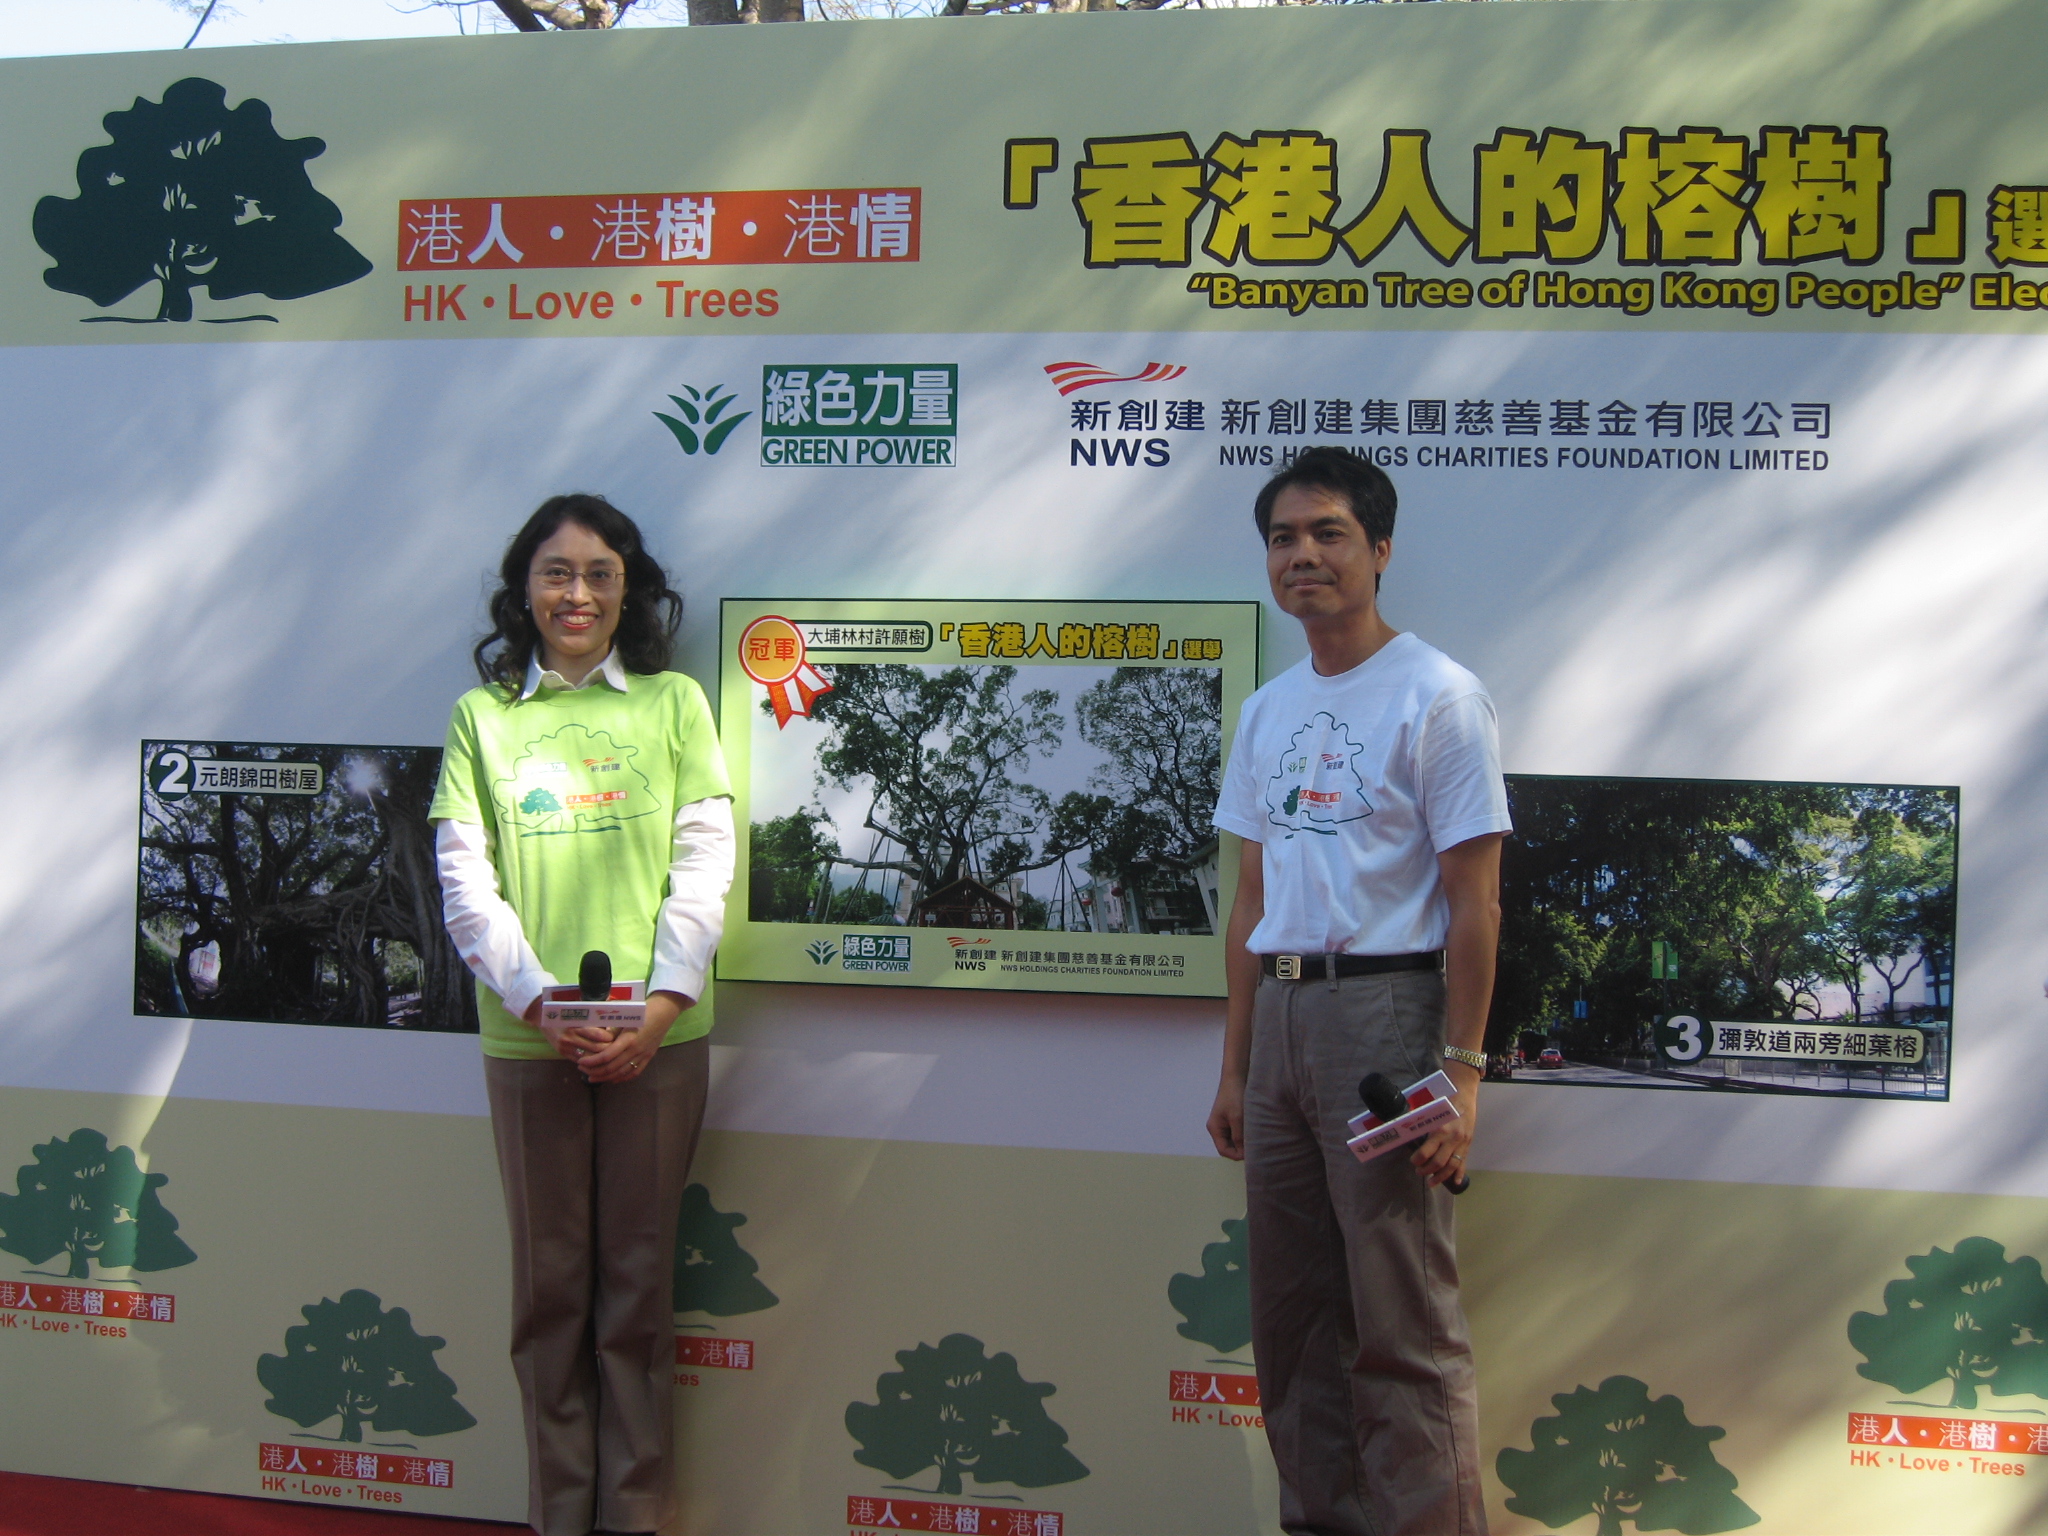 Lam Tsuen Wishing Tree Elected Banyan Tree of Hong Kong People